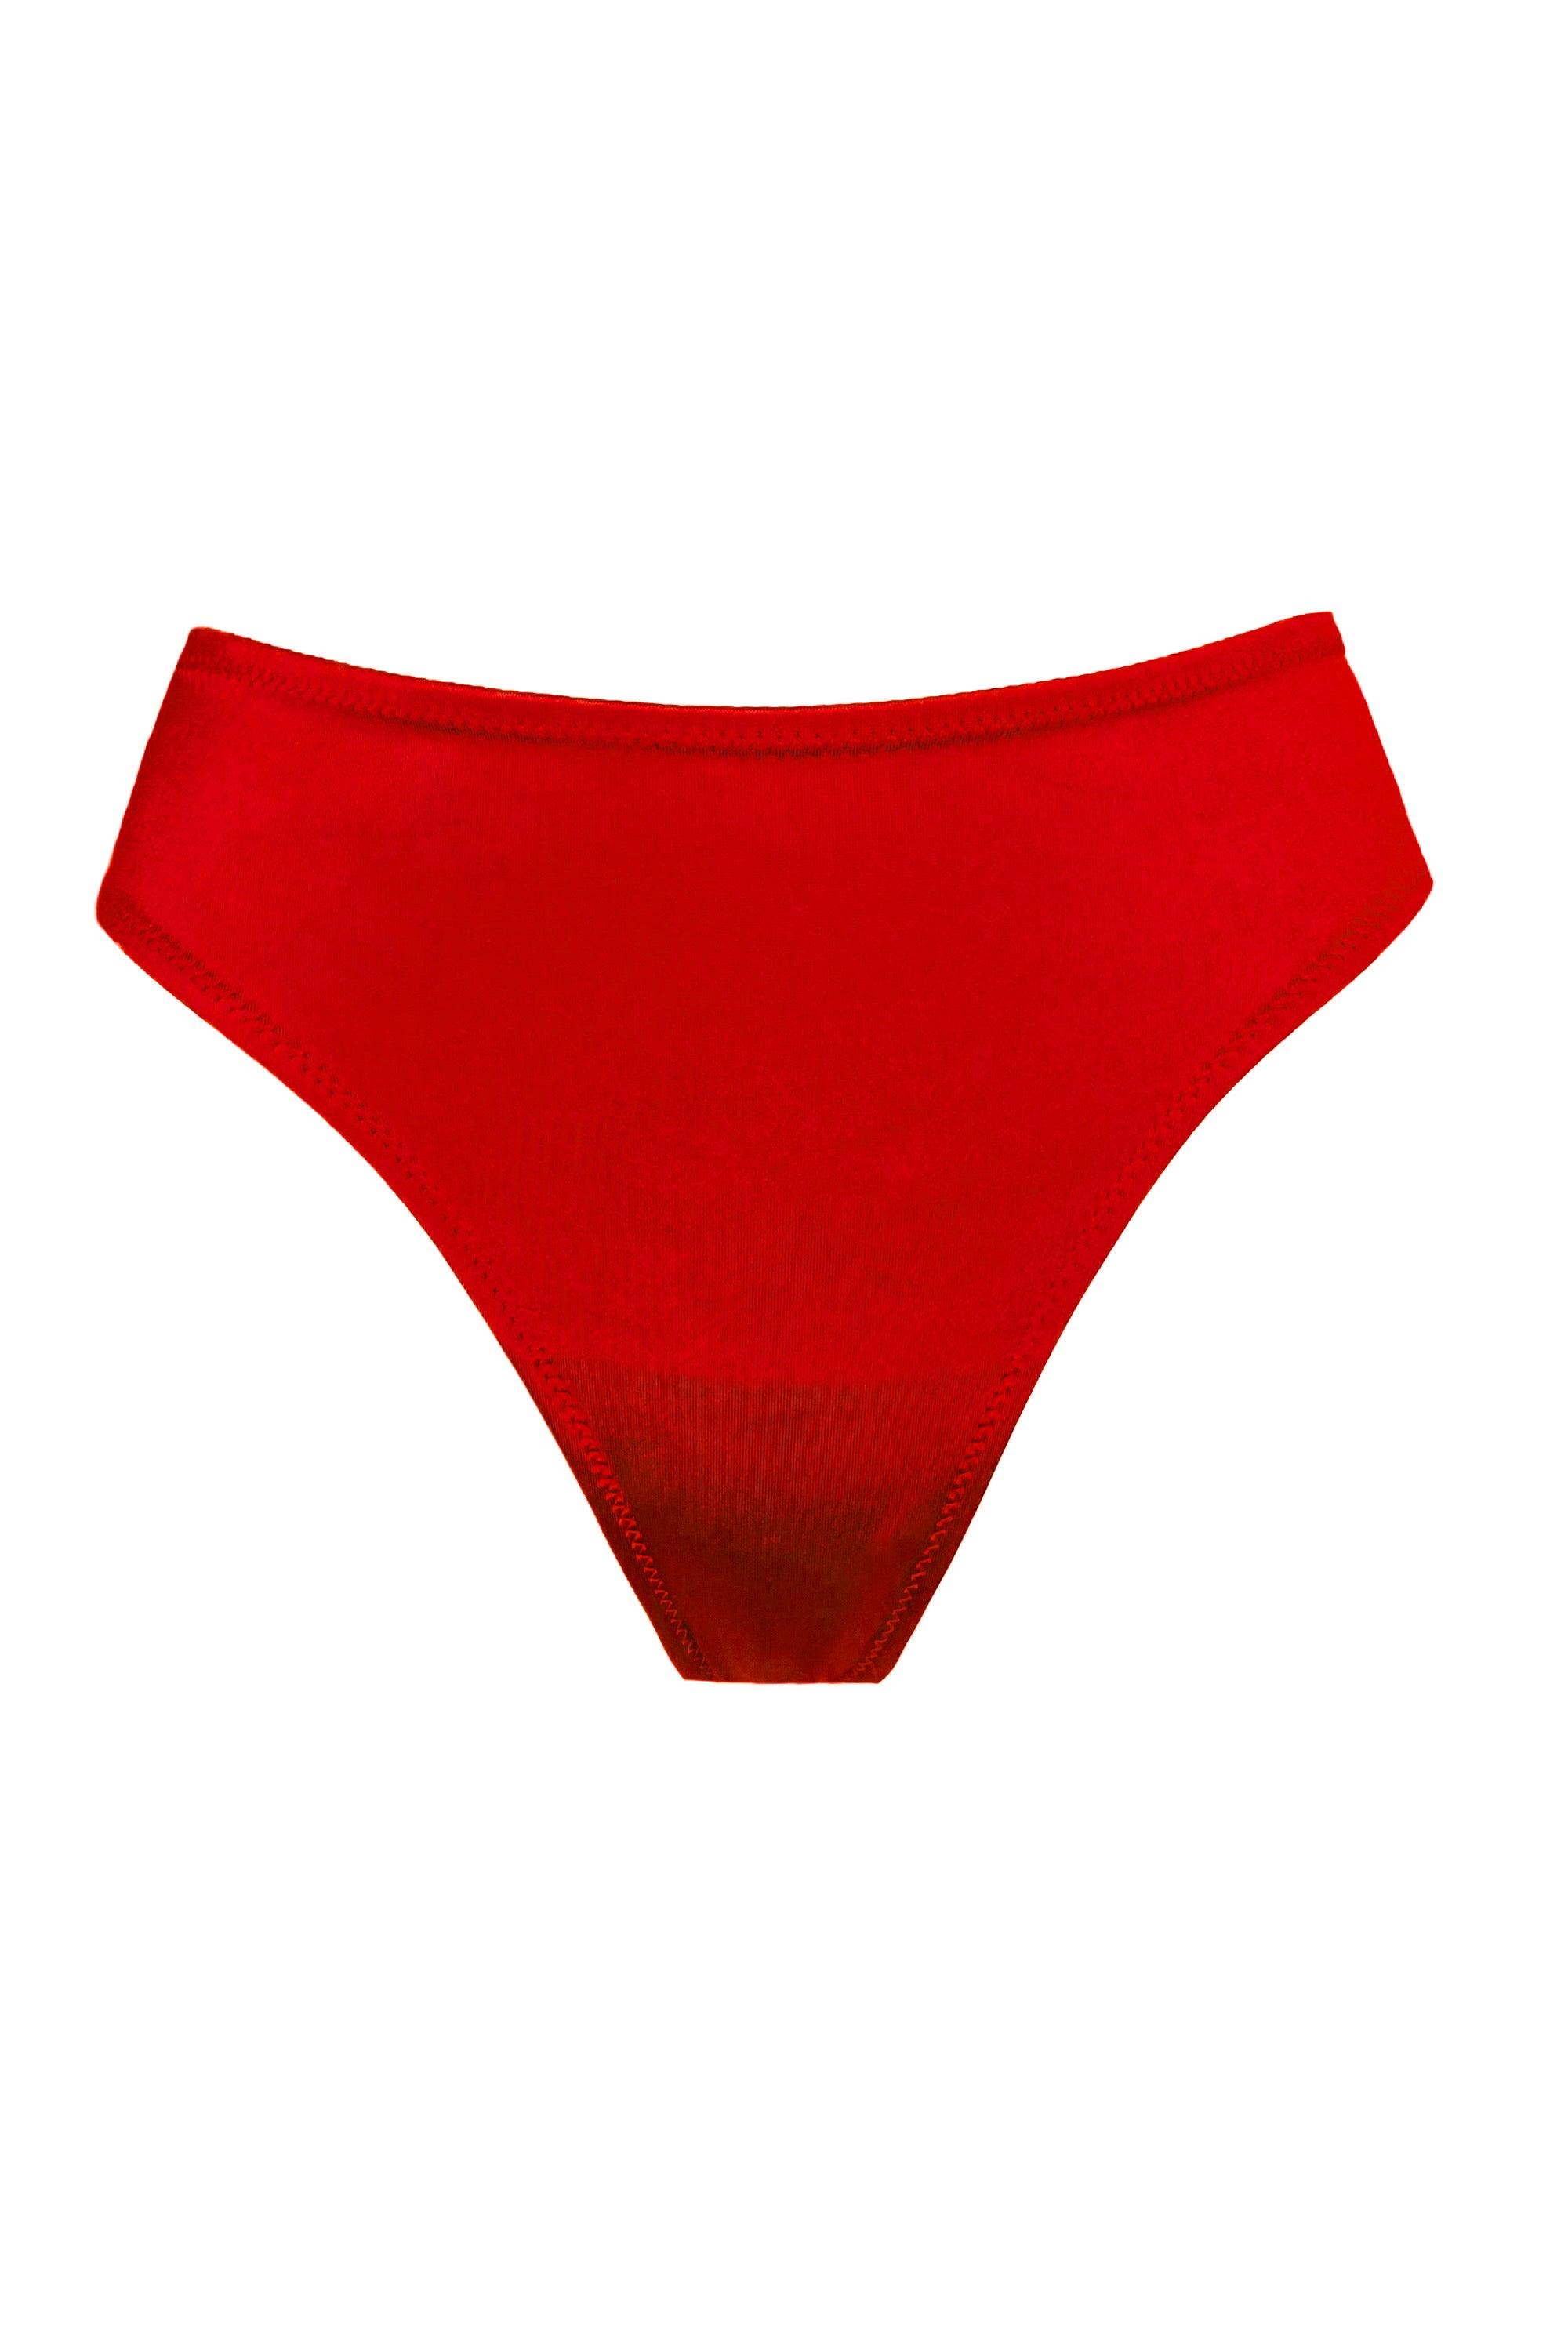 Joli Gloss red-black mid-waisted thongs - yesUndress